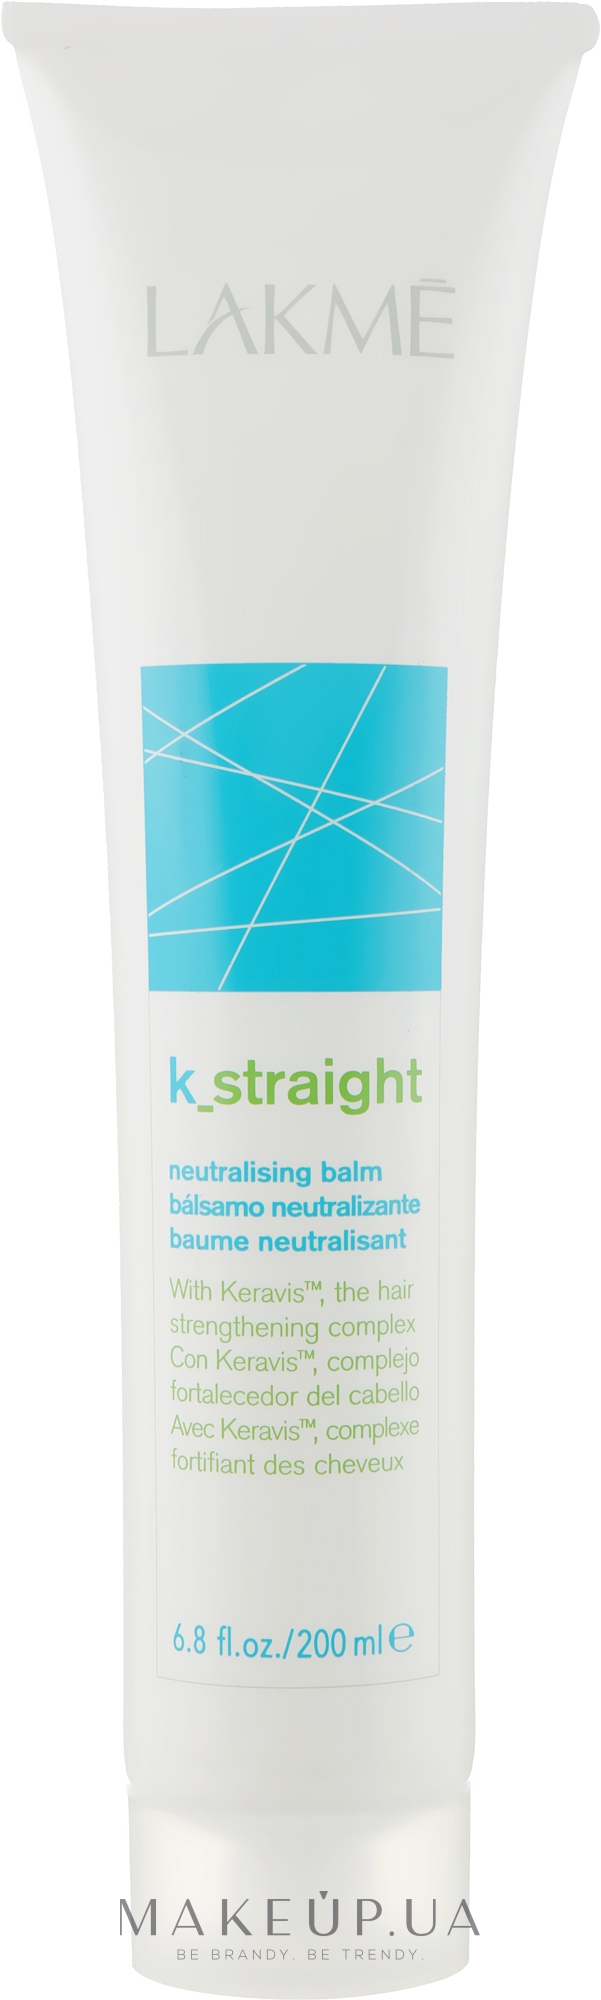 Бальзам-нейтрализатор для выпрямления волос - Lakme K.Straight Neutralising Balm — фото 200ml